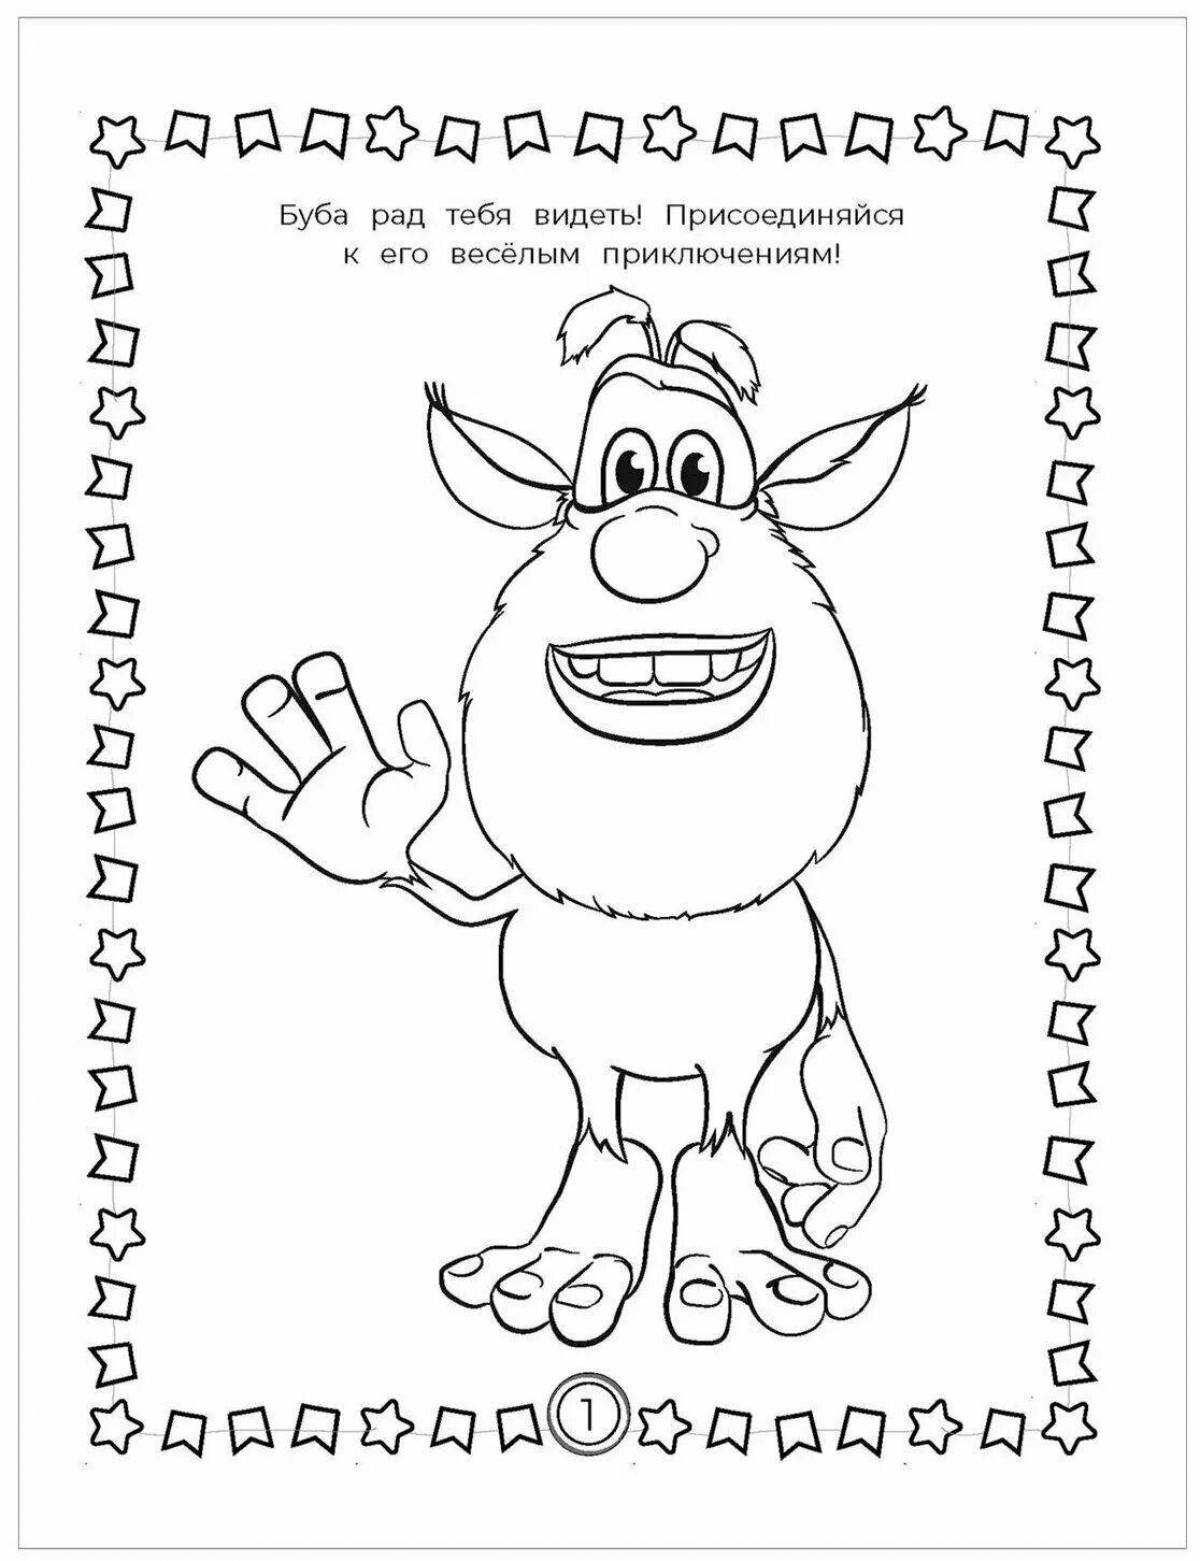 Delightful buba coloring book for kids